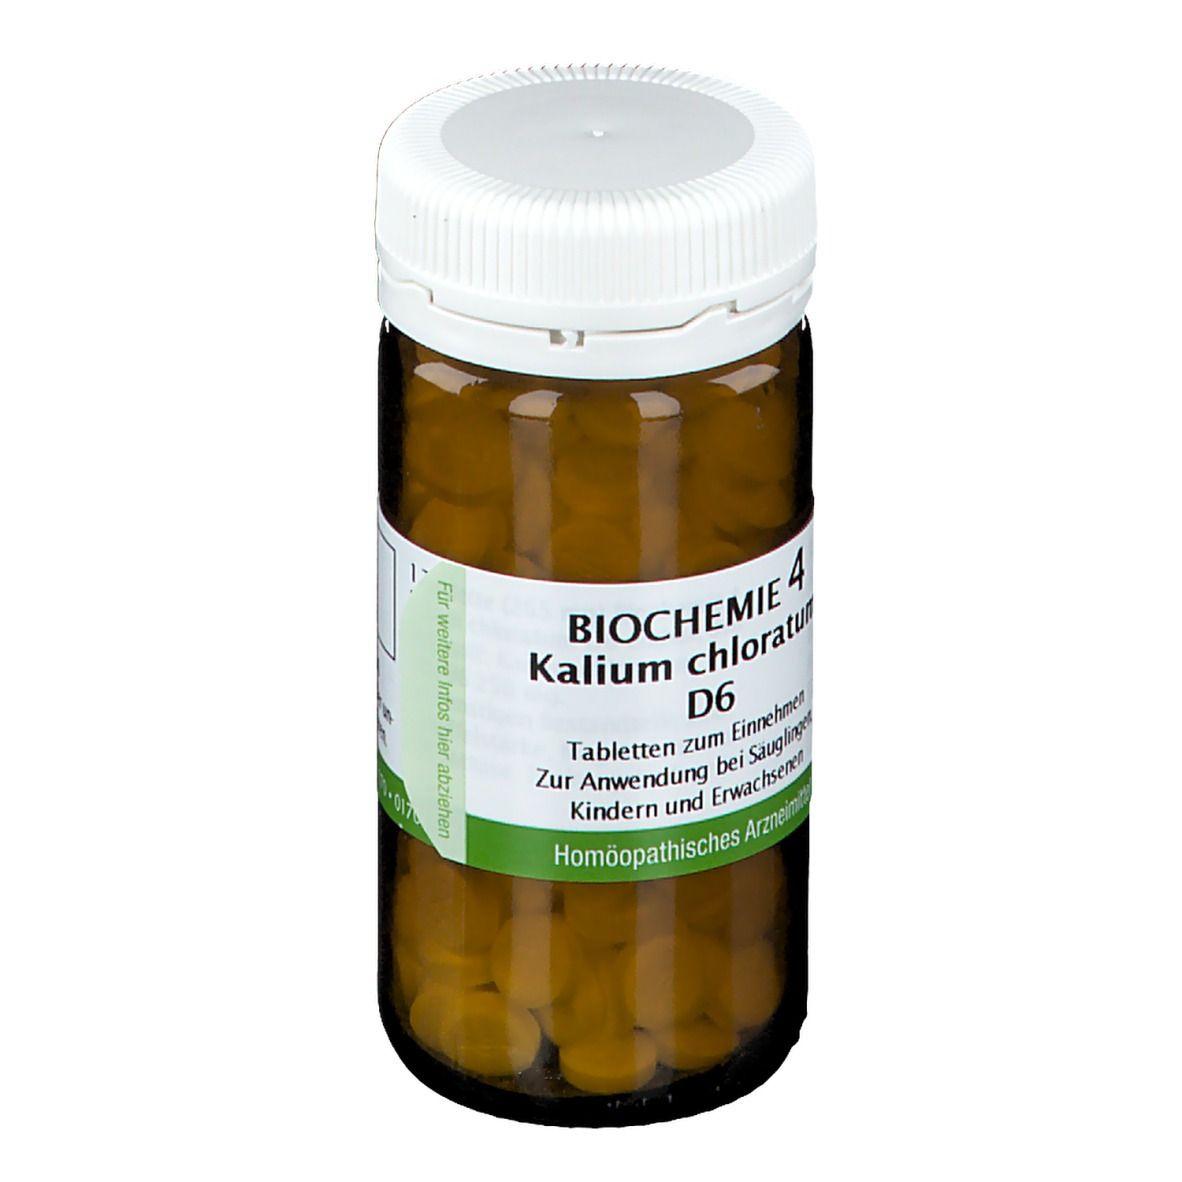 Bombastus Biochemie 4 Kalium chloratum D 6 Tabletten